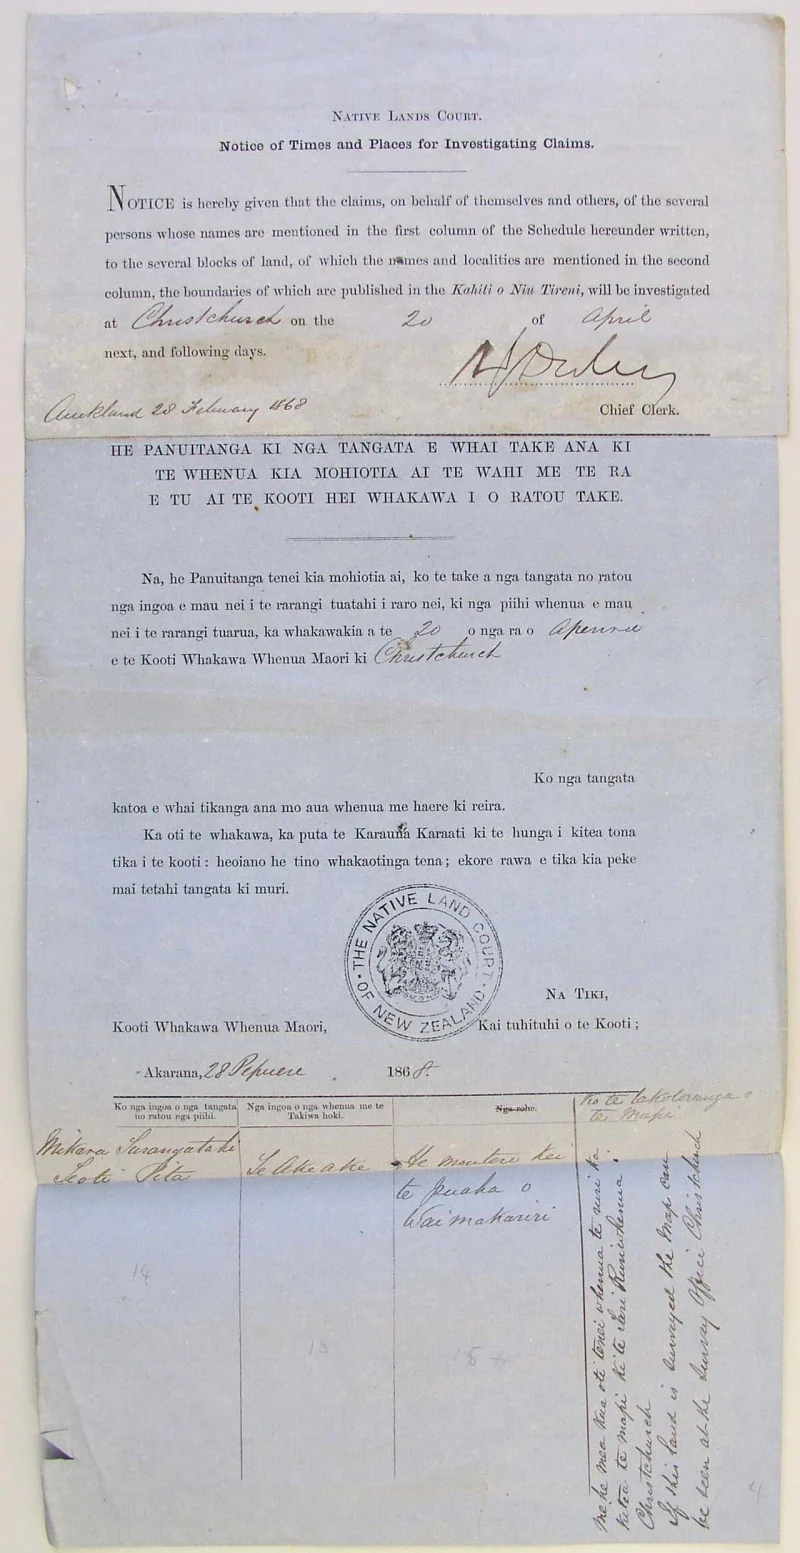 Land Claim for Akeake Island (written in English and Maori) - 1868